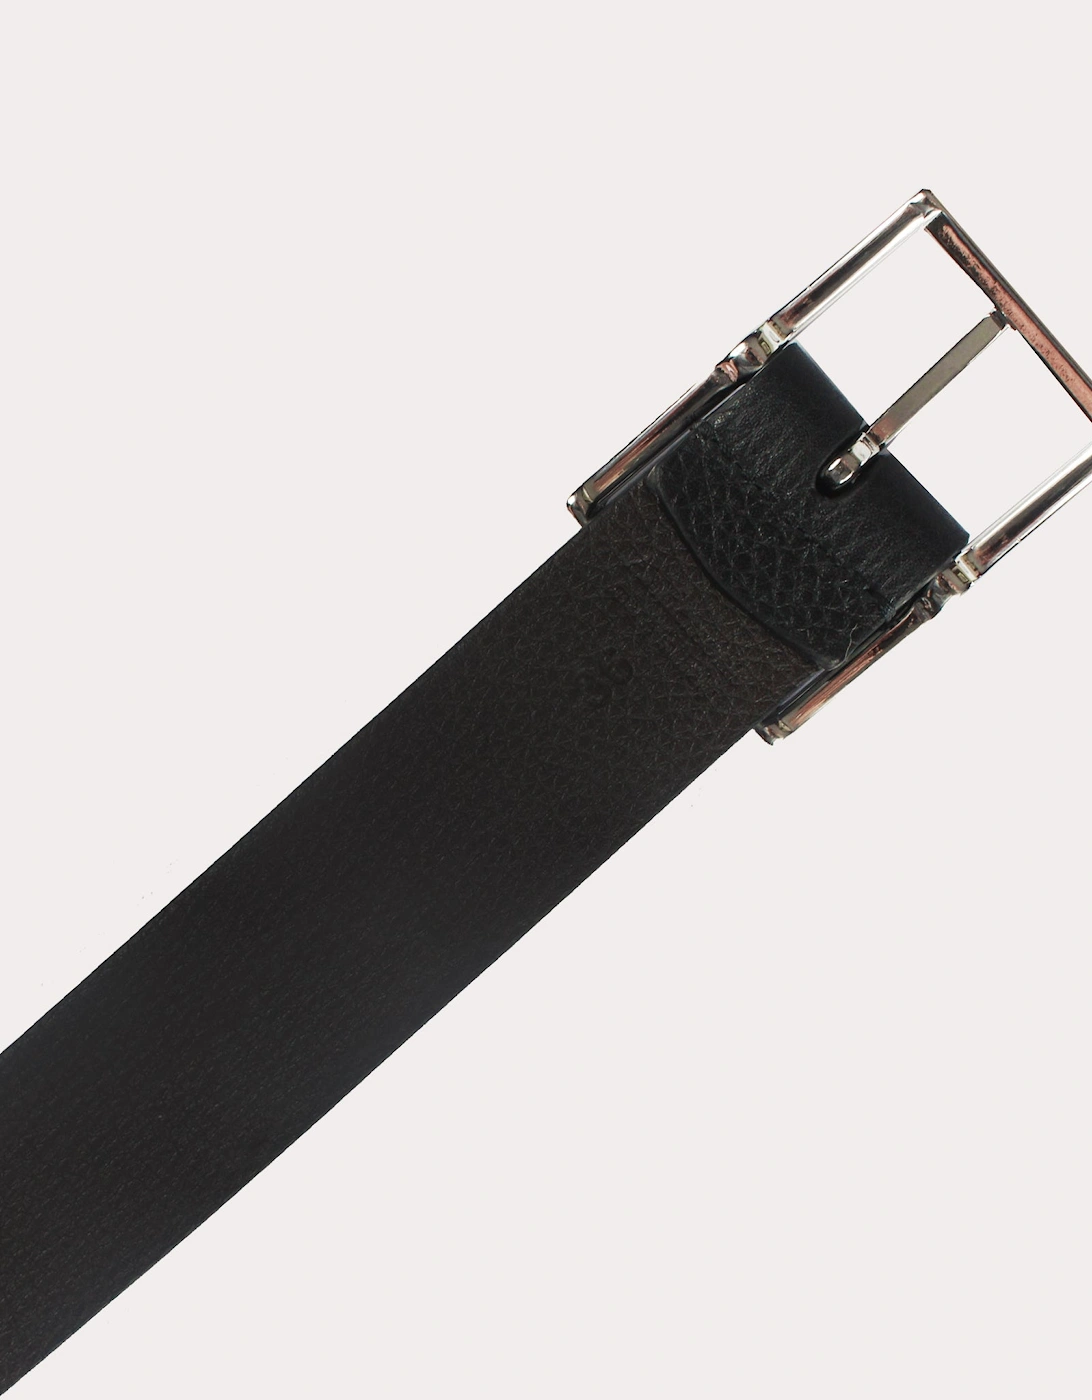 Andersons Leather Belt - Dark Brown Smooth